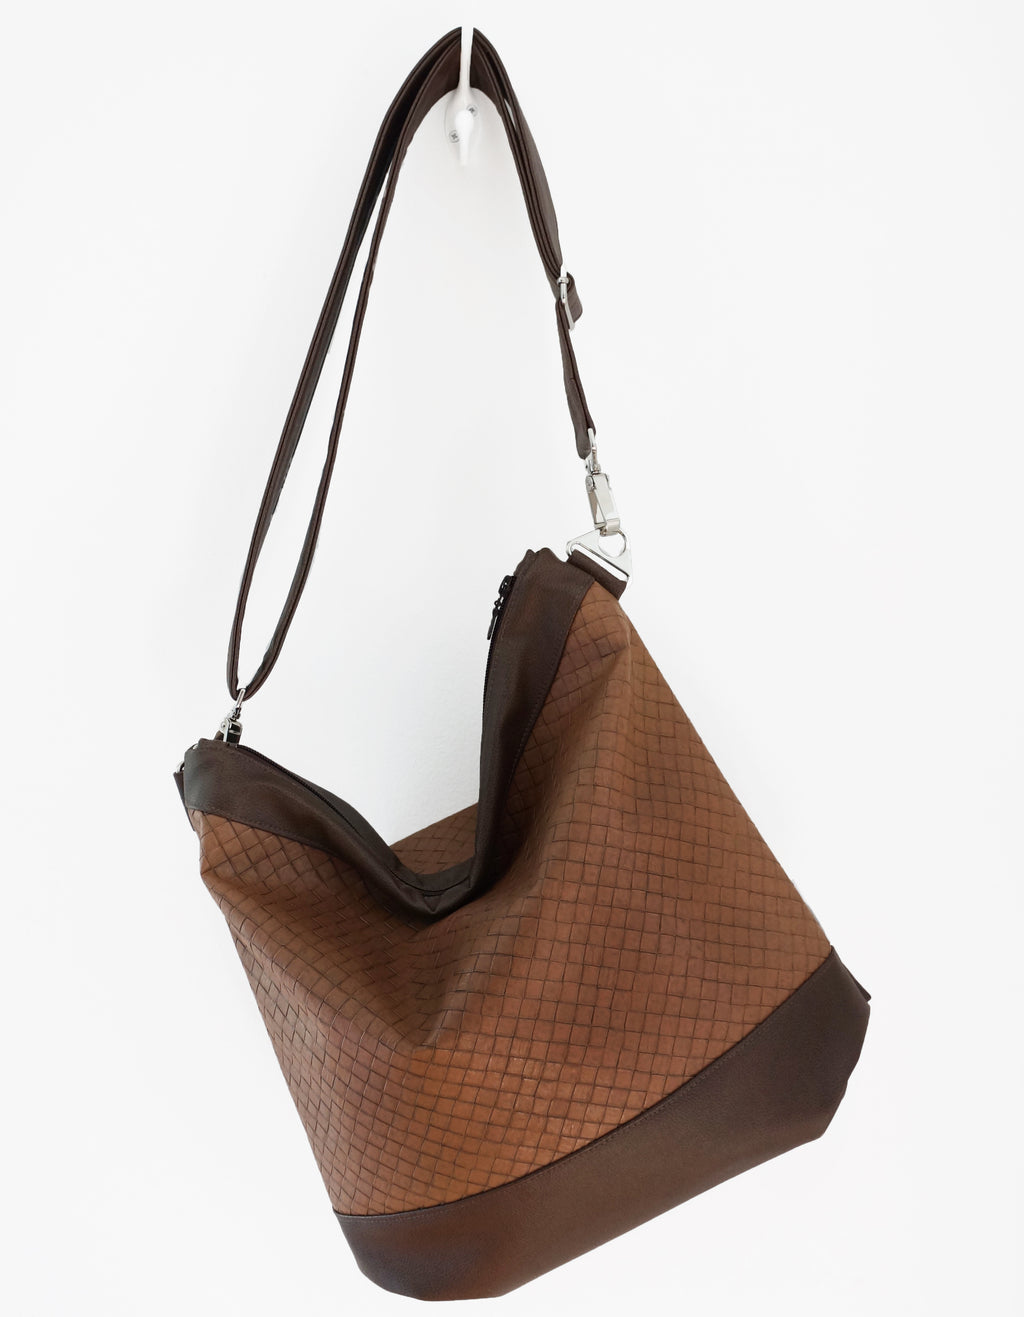 Sofia - basket weave textured vegan leather - boho style slouch bag	